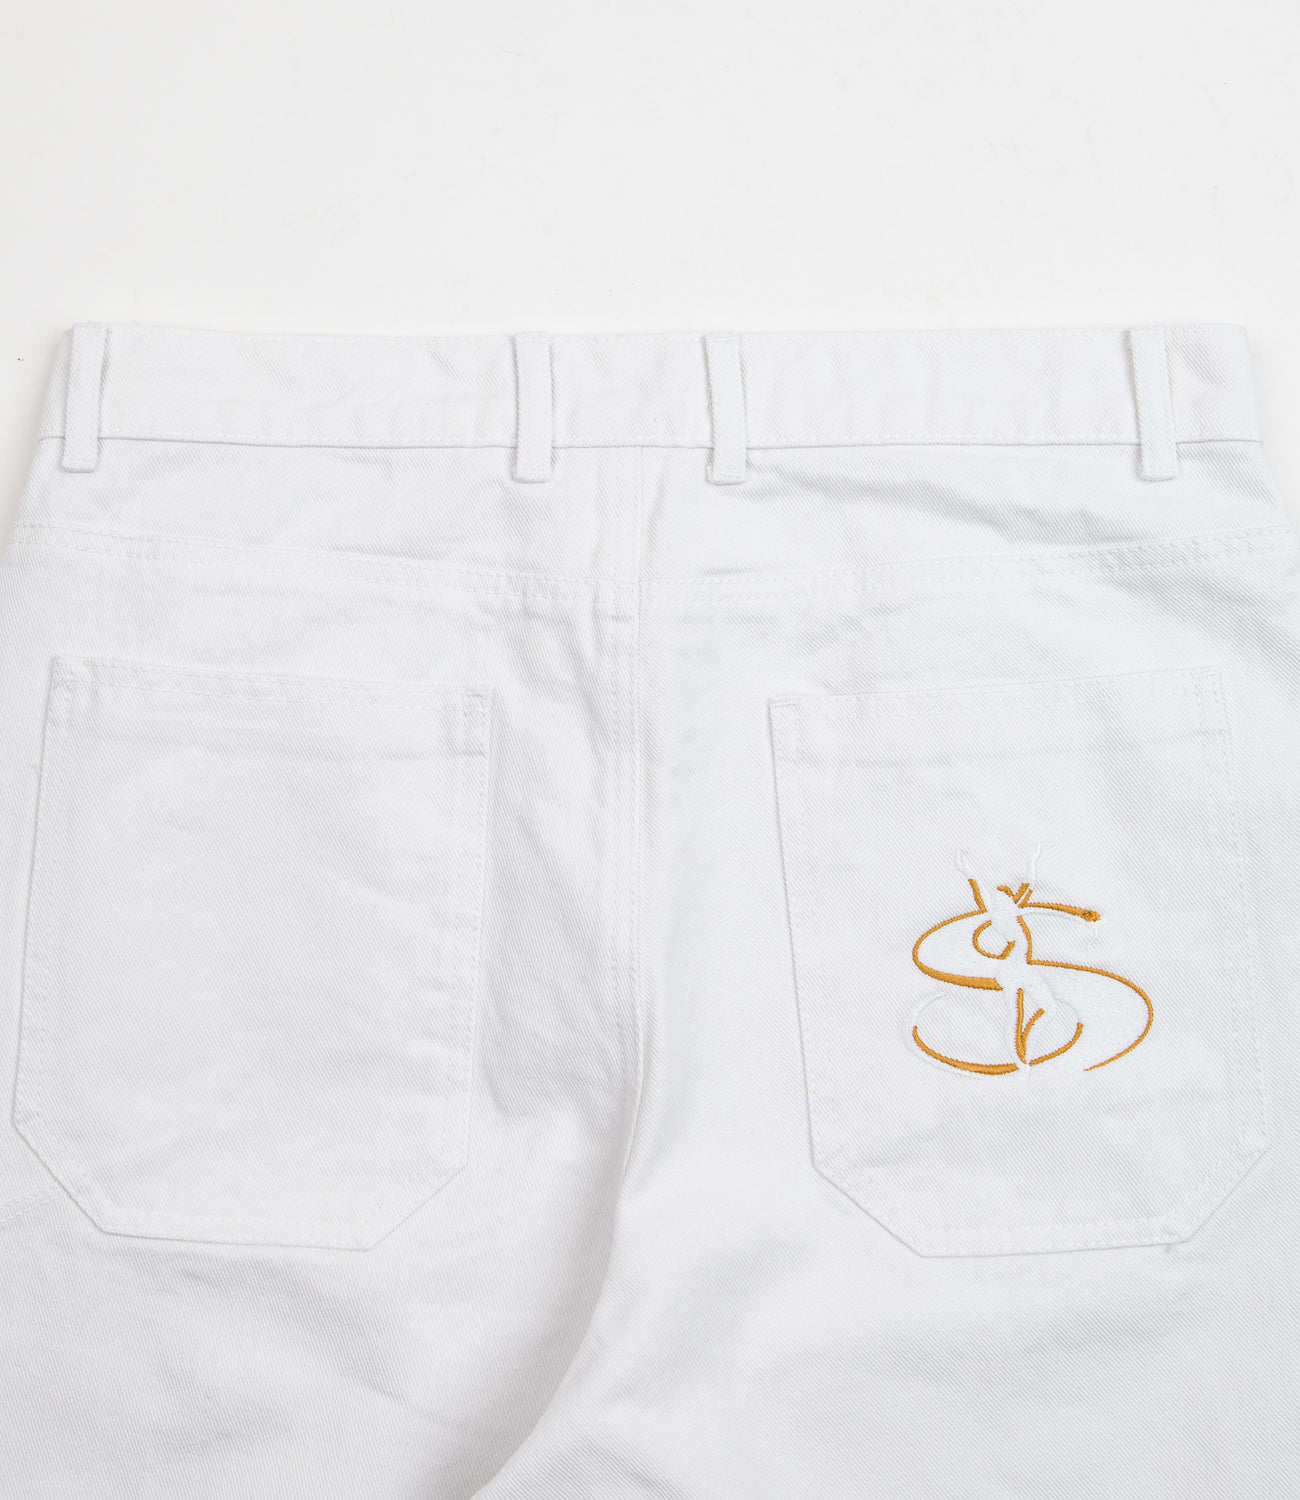 Yardsale Phantasy Jeans - Off-White | Flatspot